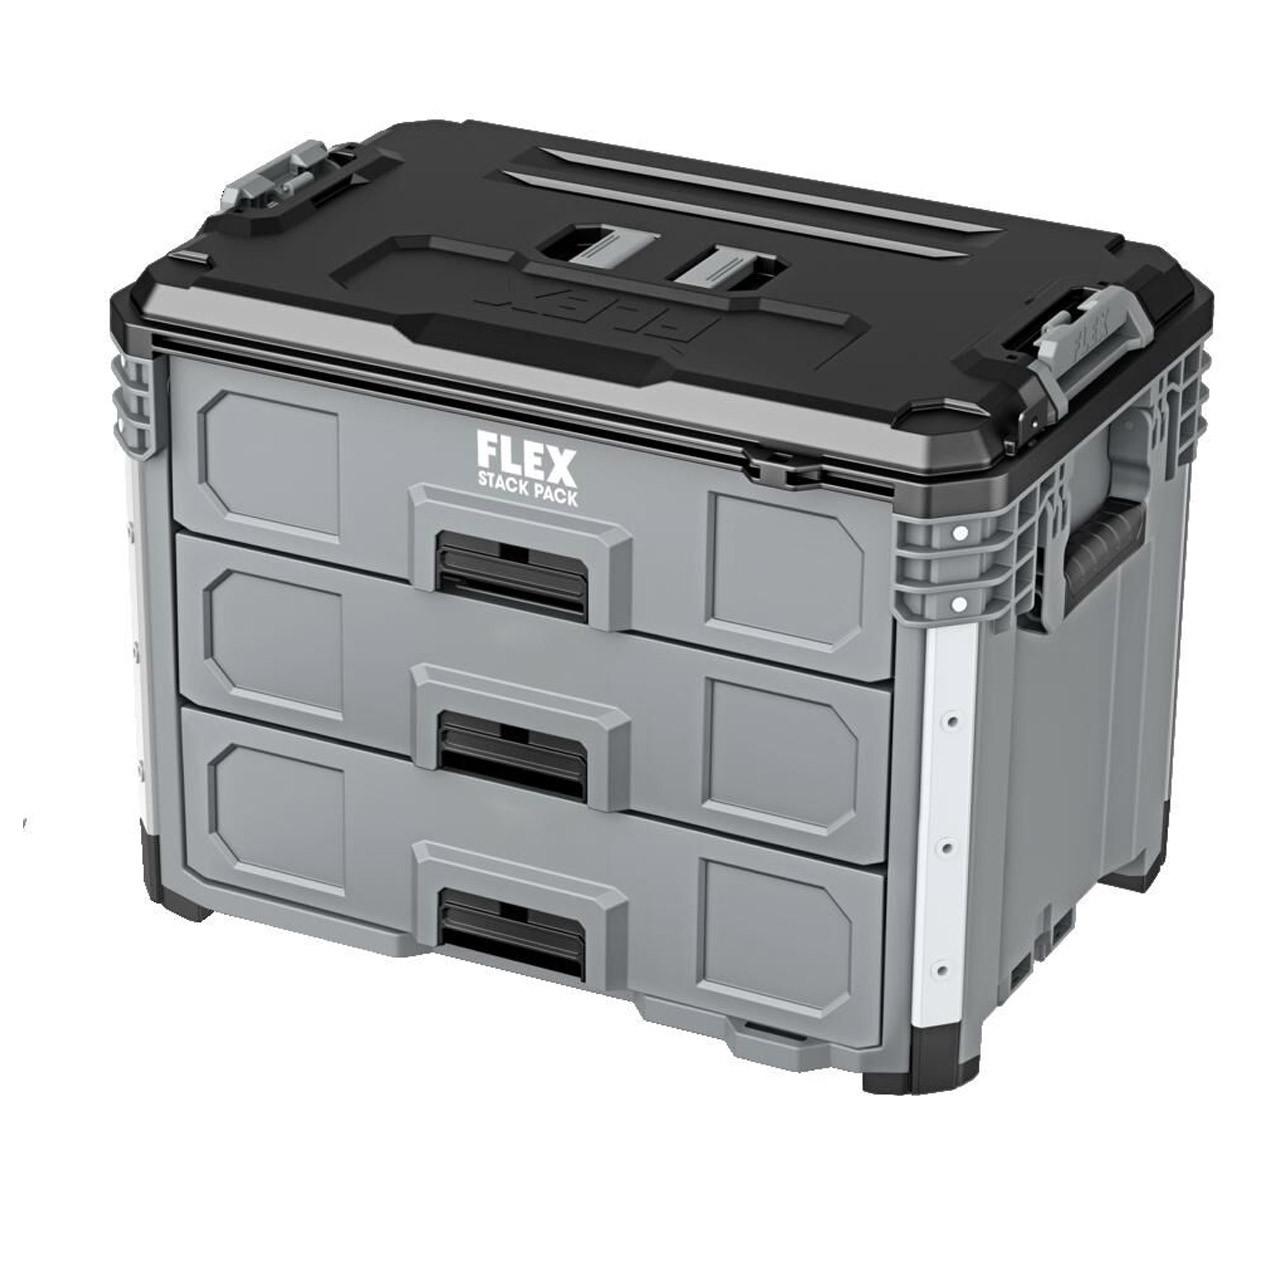 FLEX Storage System 3 drawer Tool Box